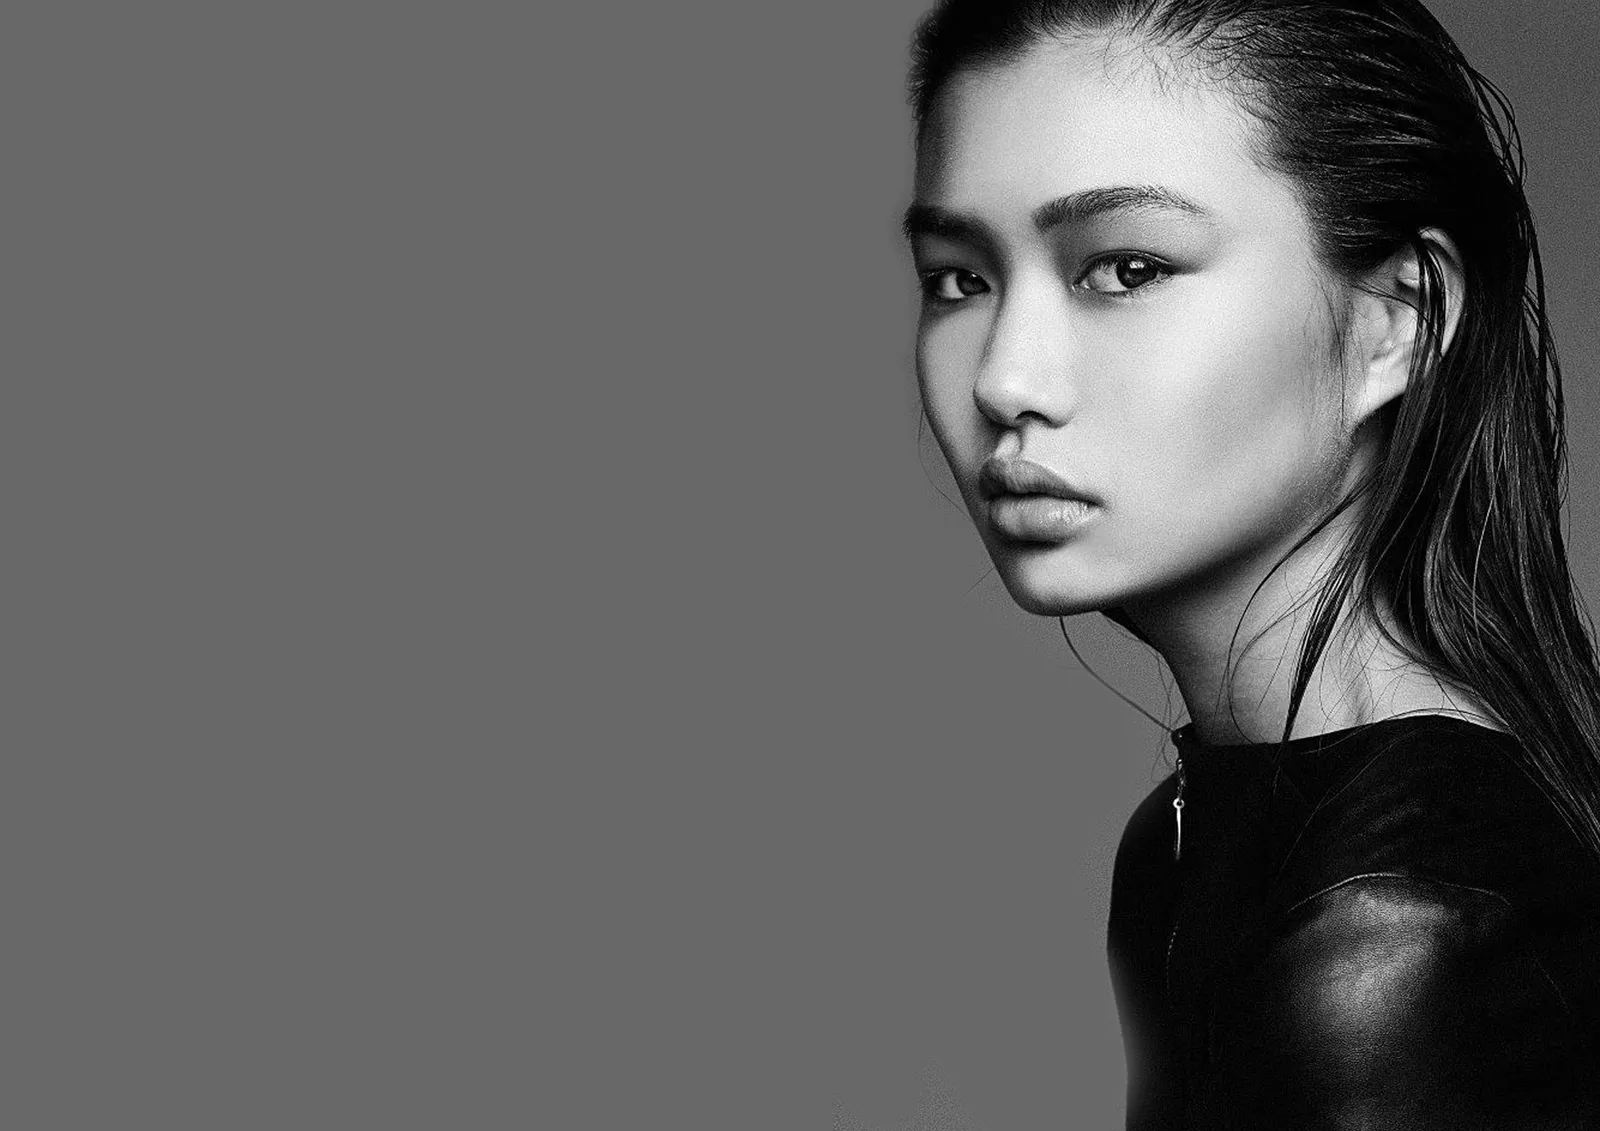 Model Asia Menjadi Wajah Baru Pada Perhelatan Mode Dunia